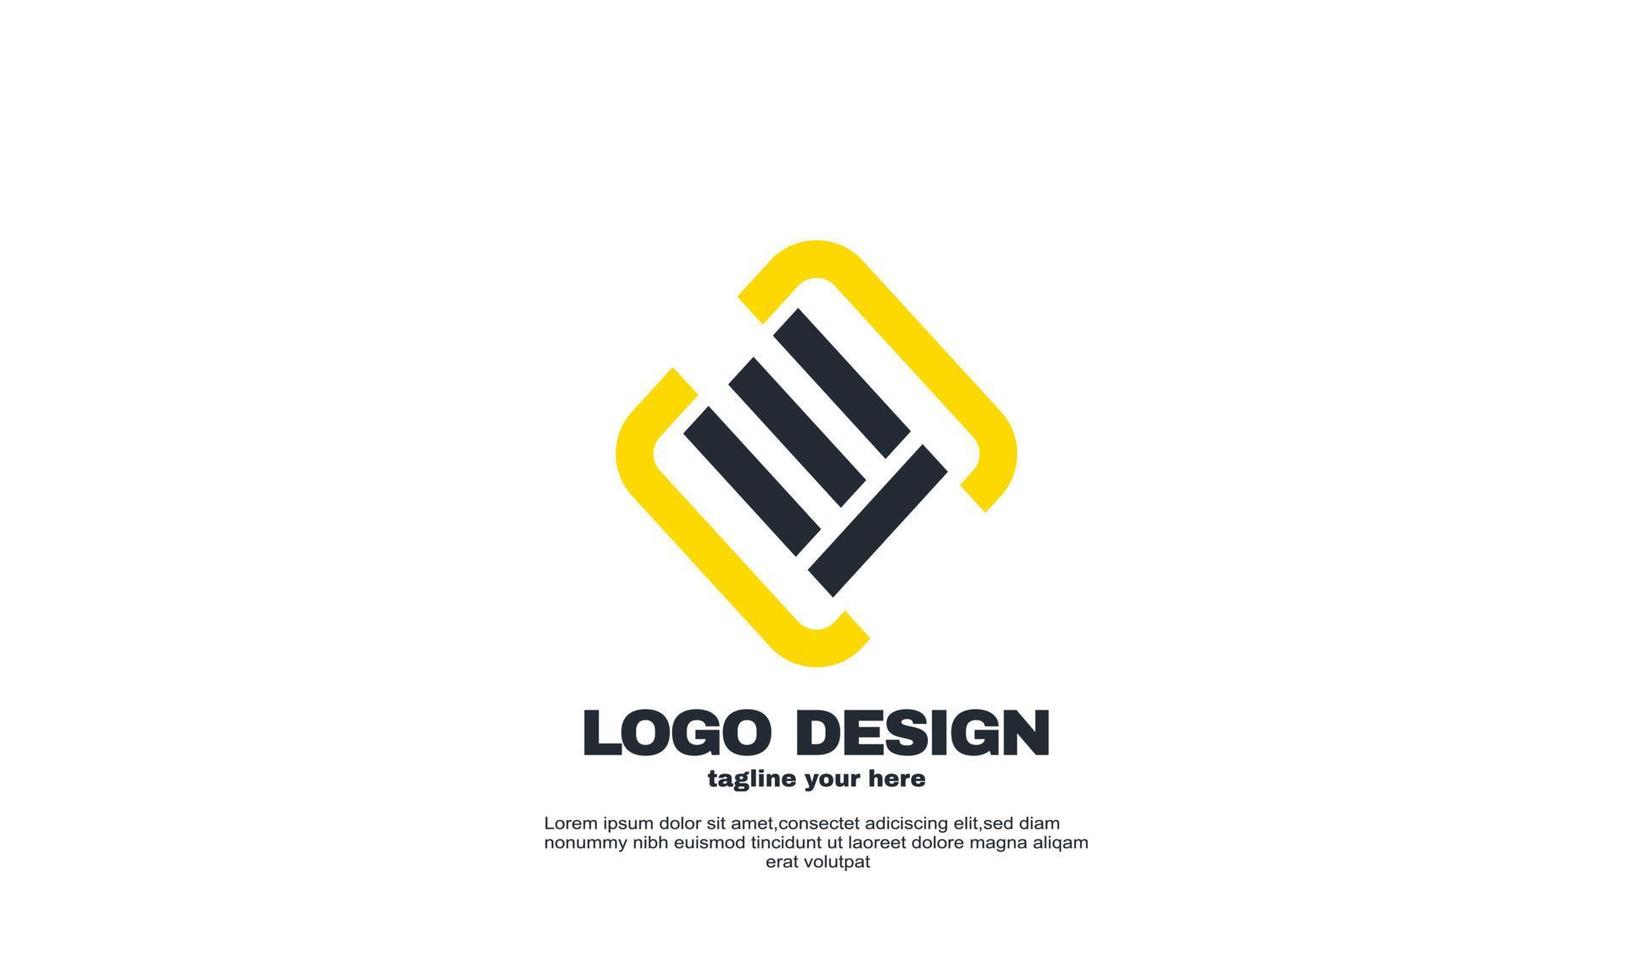 estoque vetor retângulo abstrato vetor elementos de design sua marca empresa modelo de design de logotipo de negócios